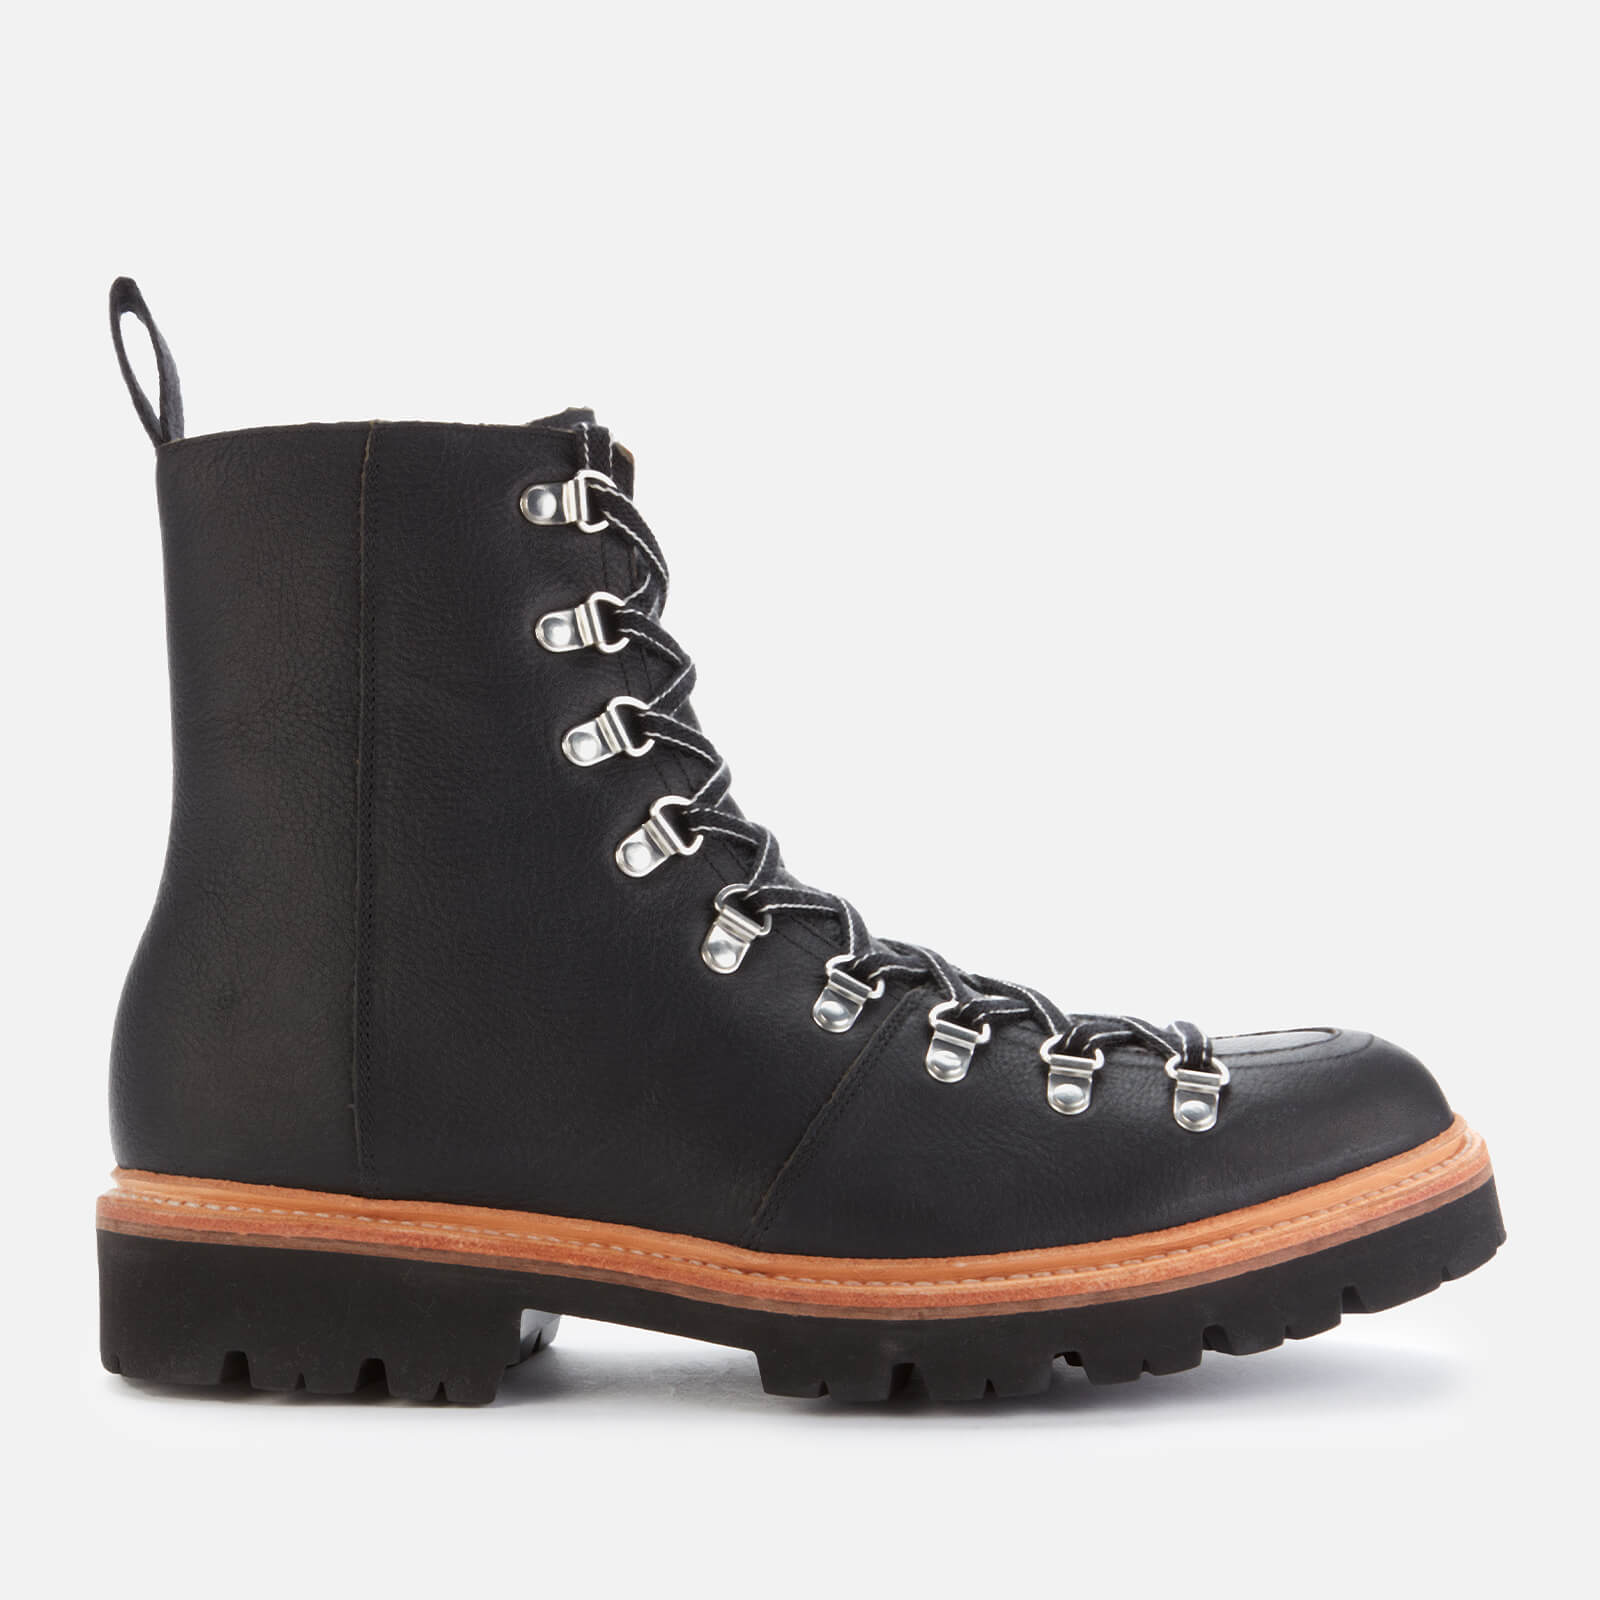 Grenson Men's Brady Leather Hiking Style Boots - Black - UK  10